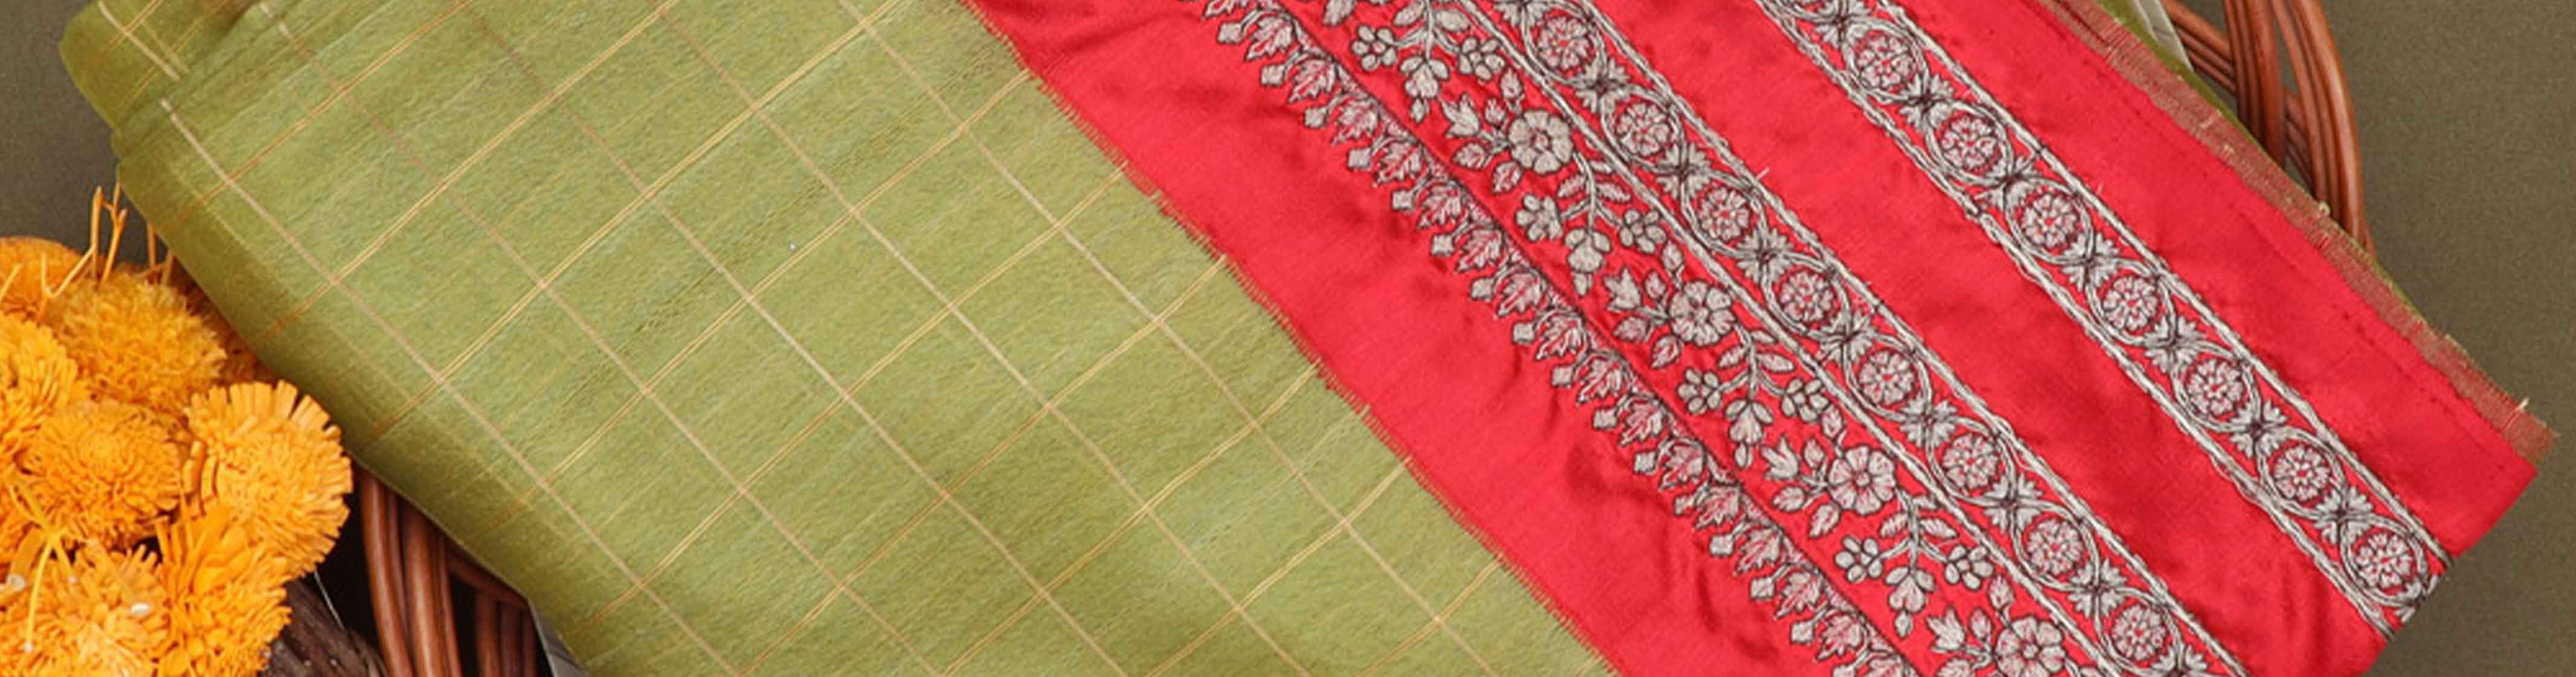 Pure Mukaish Embroidery Sarees